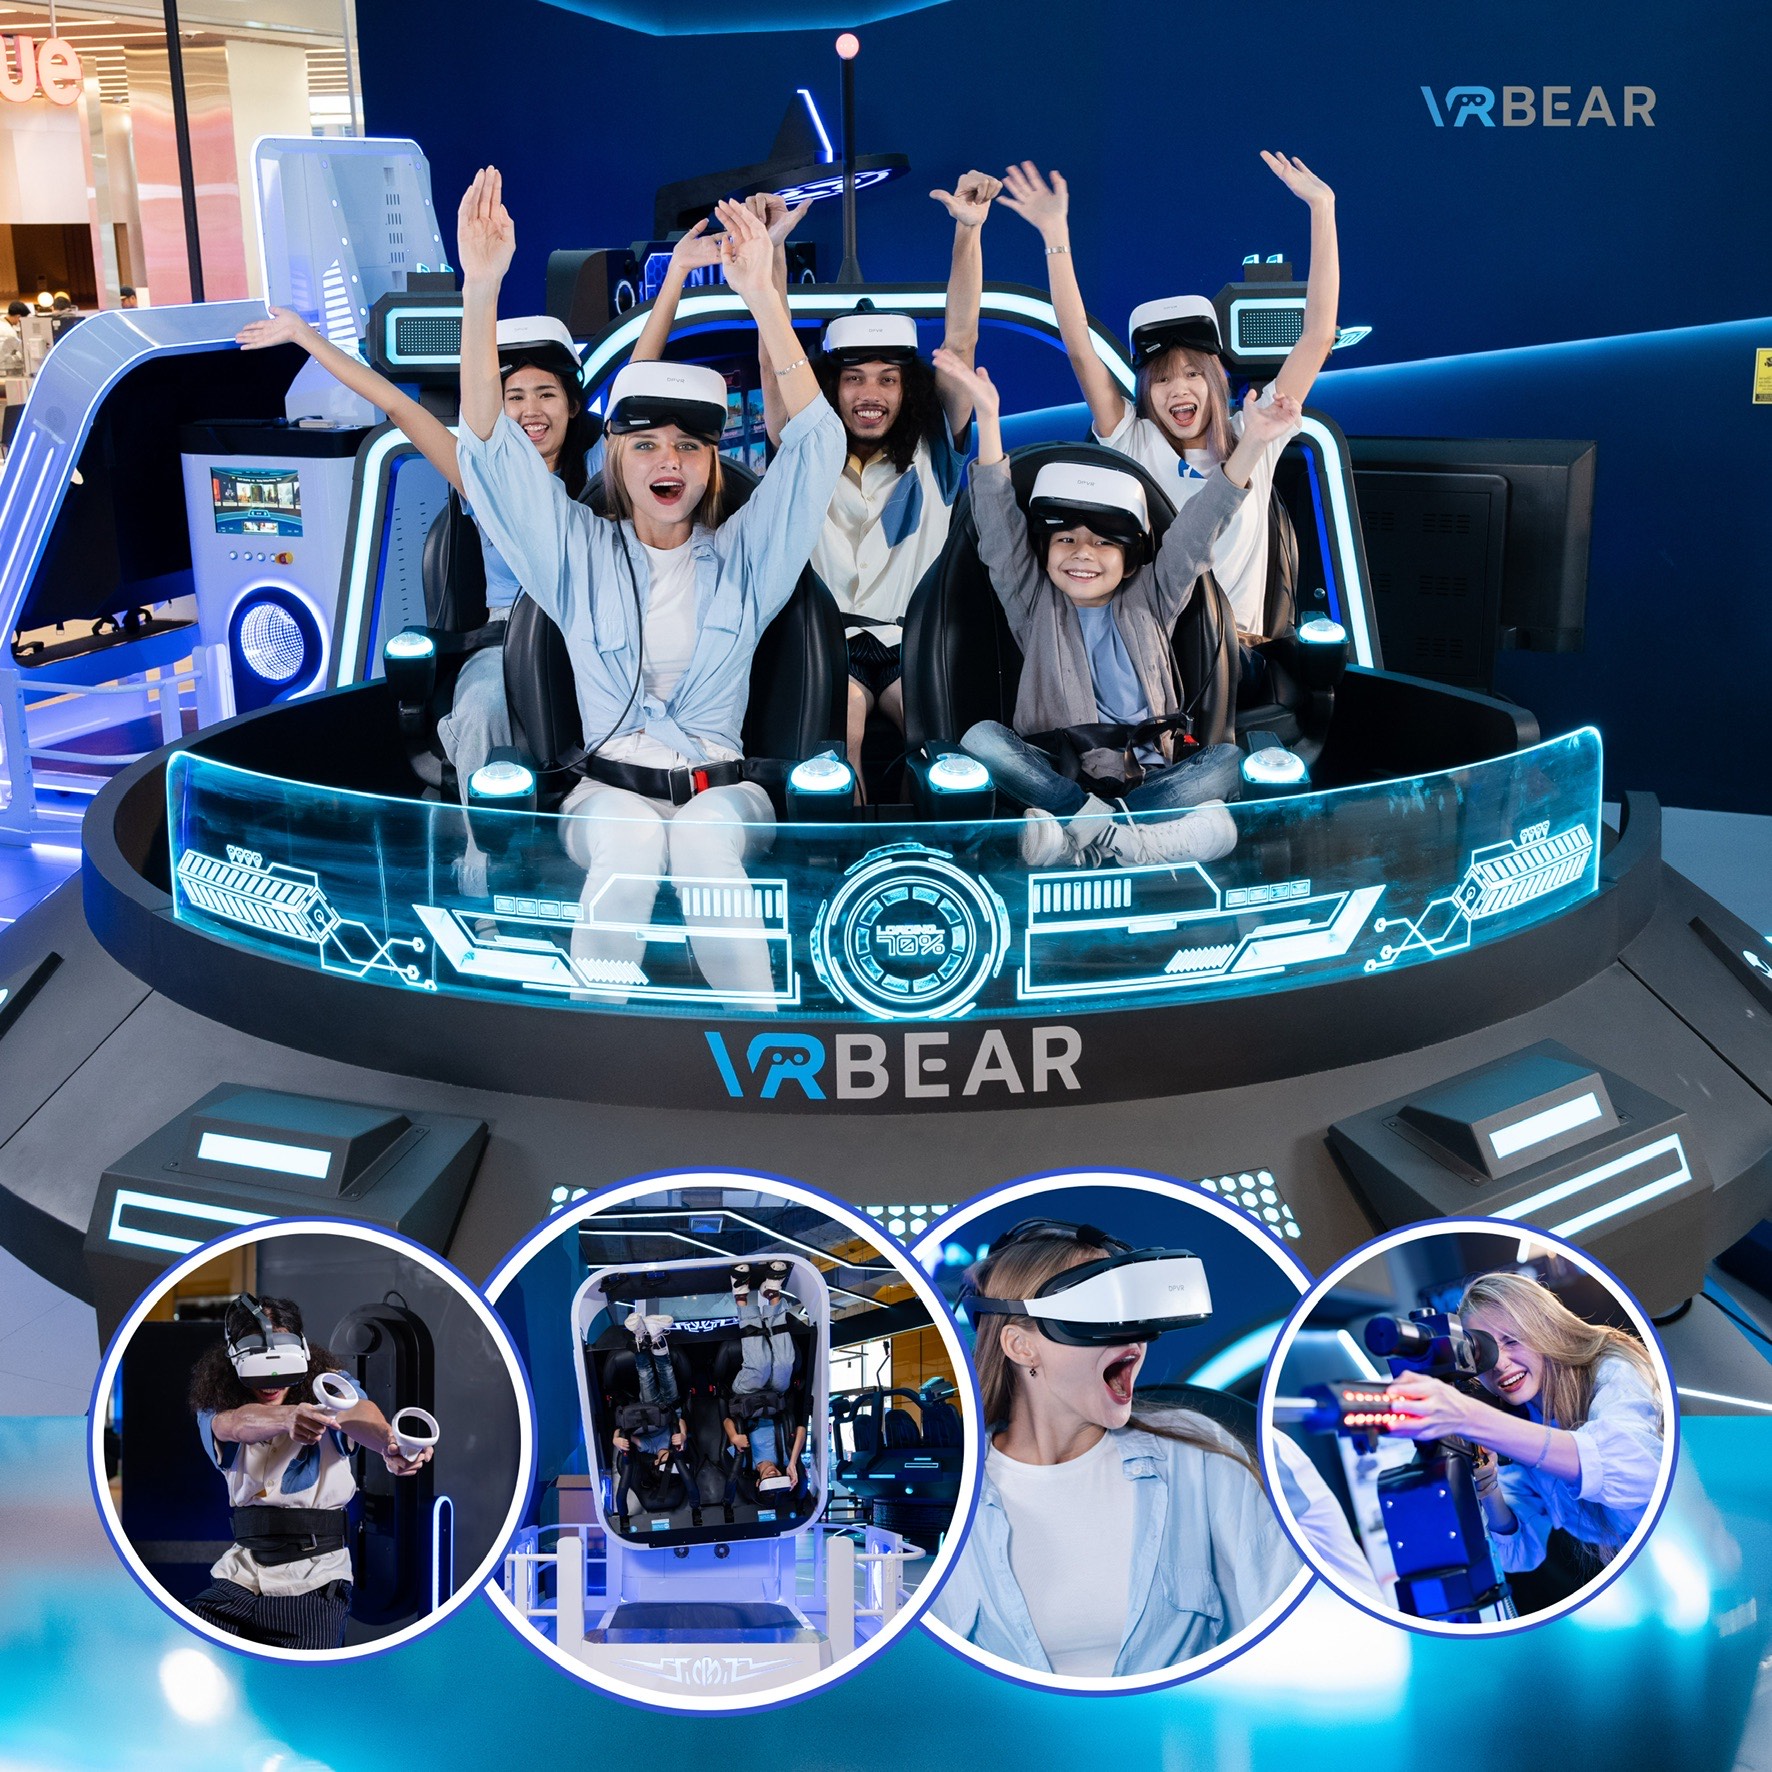 VR Bear